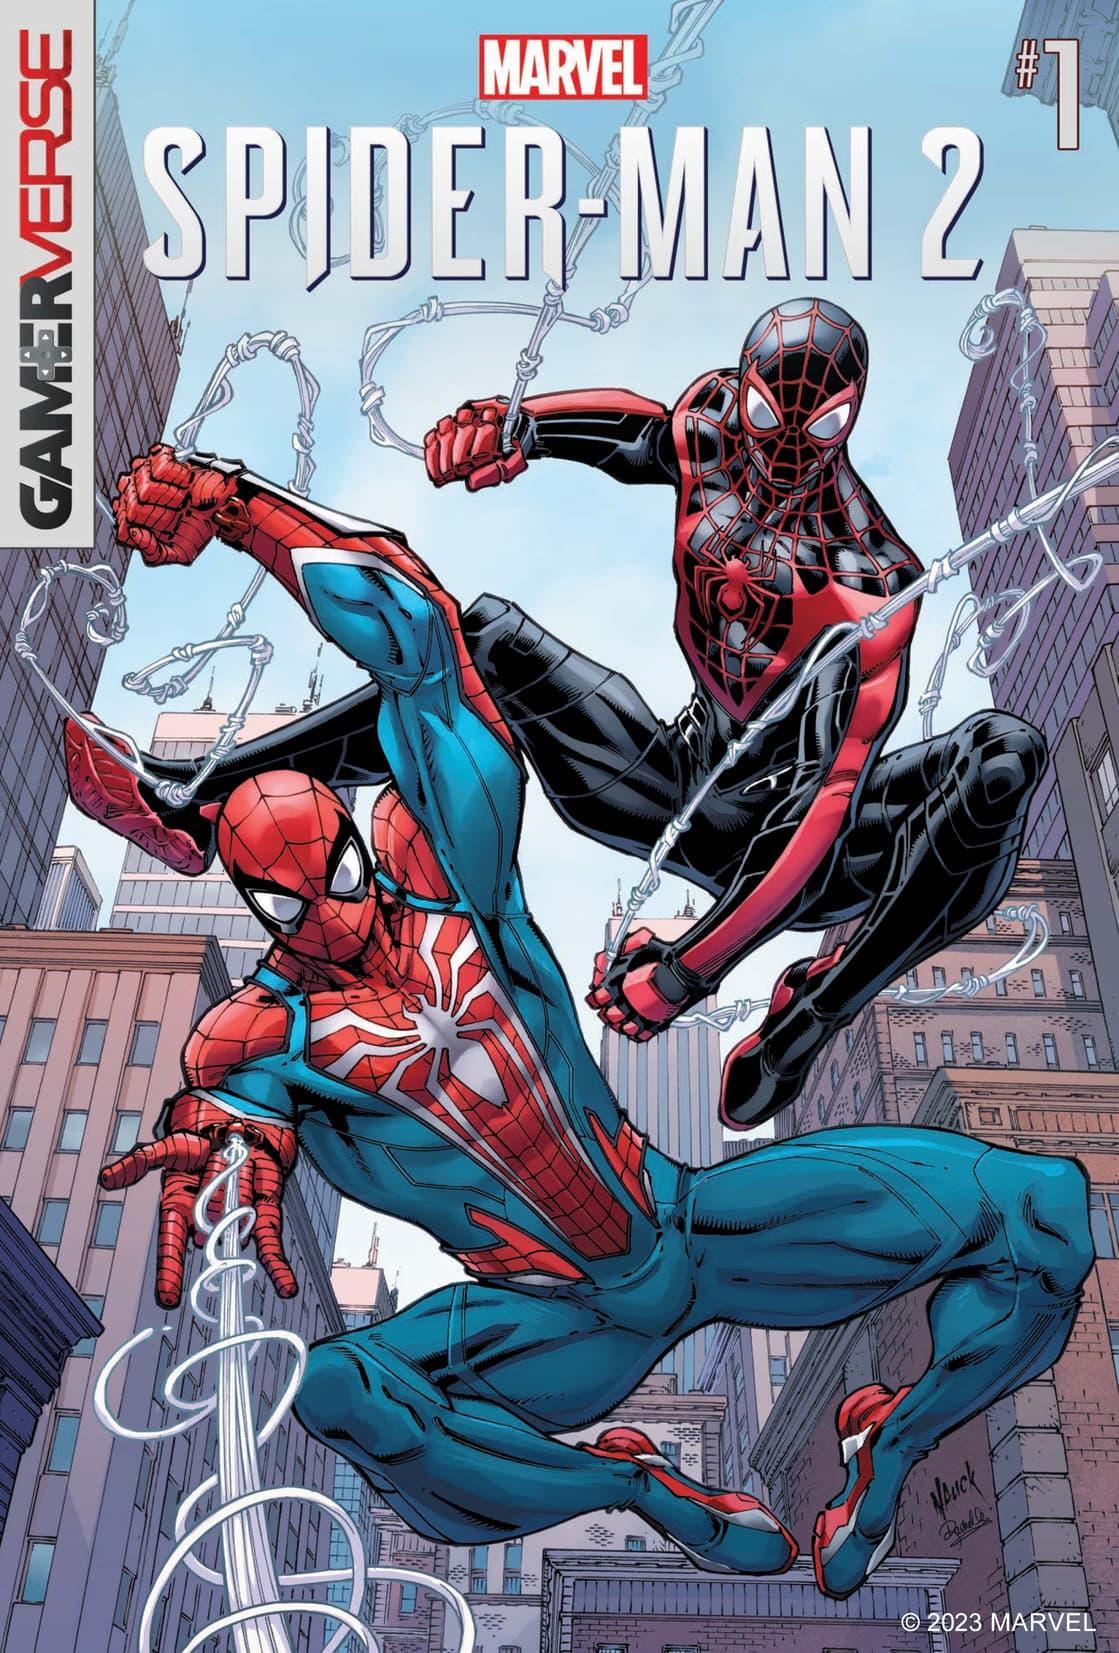 marvels-spider-man-2-fcbd-cover.jpg